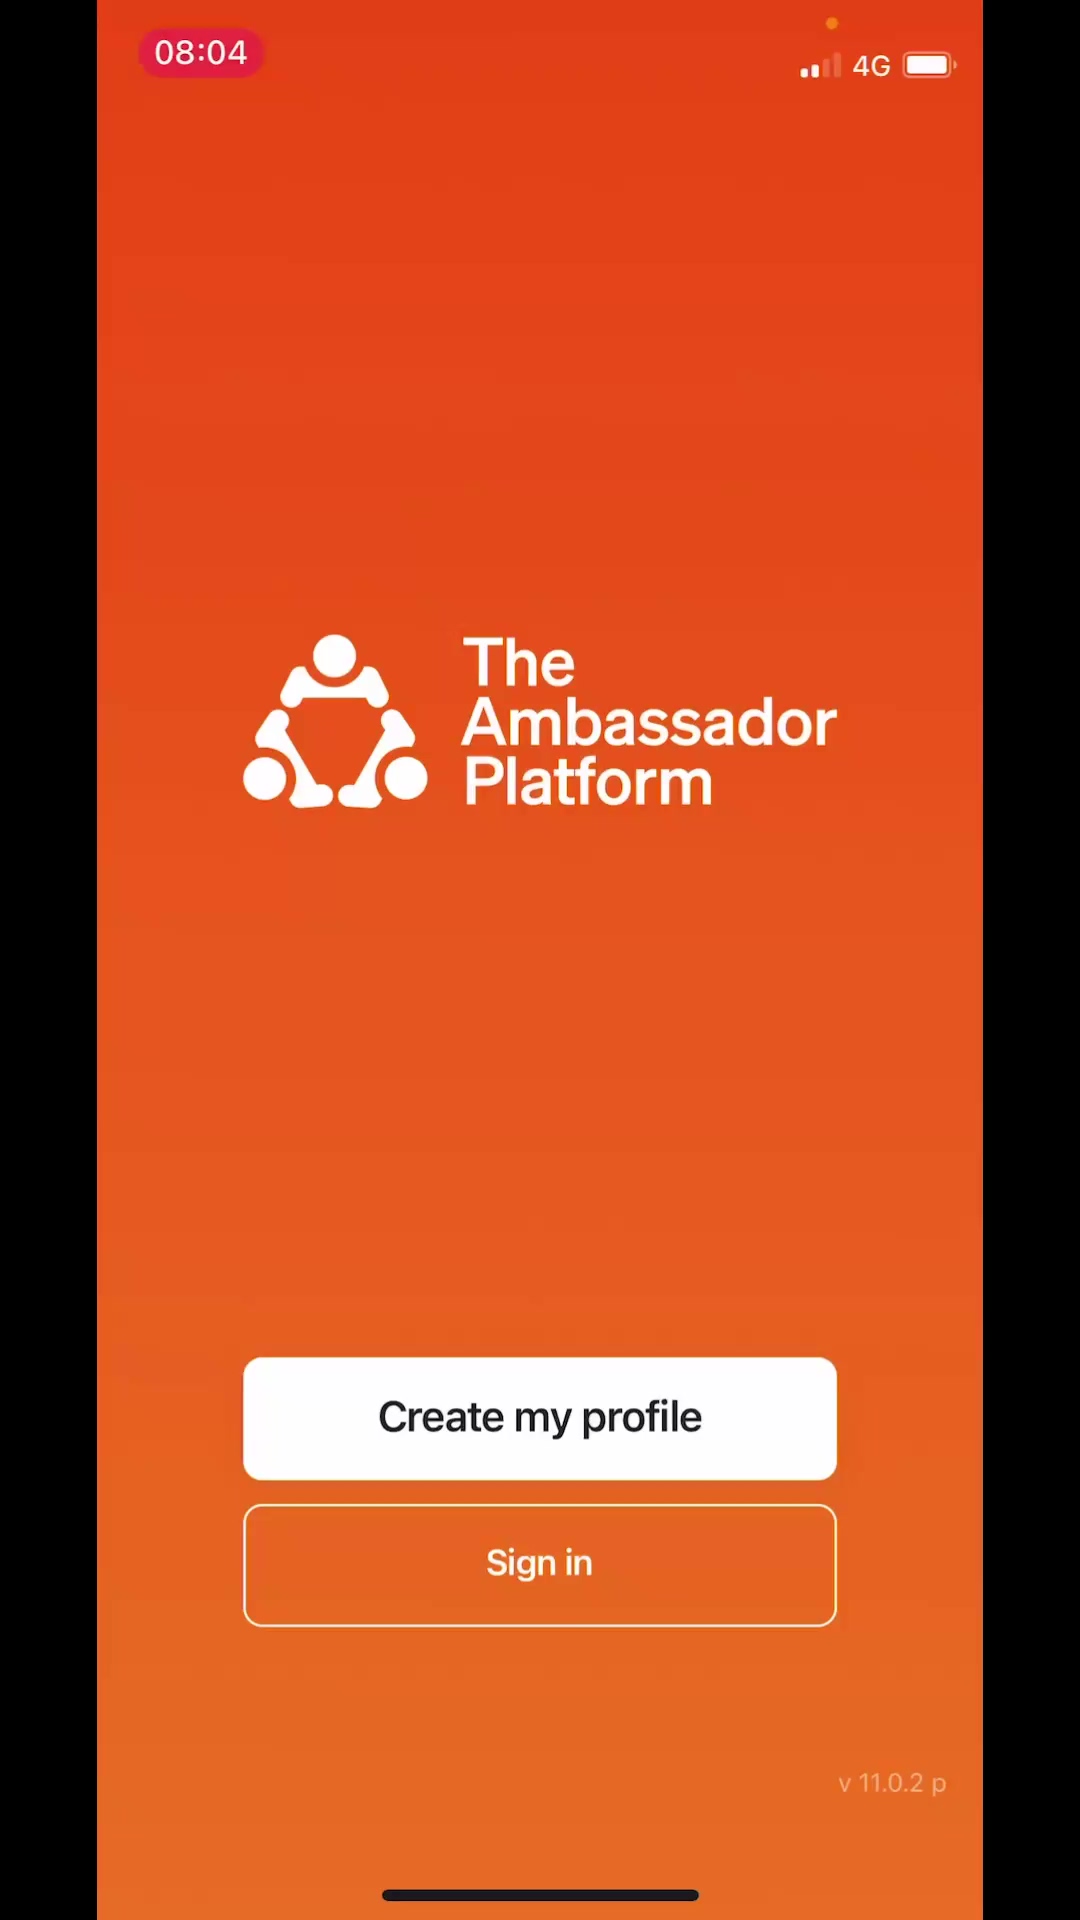 How to use The Ambassador Platform mobile app